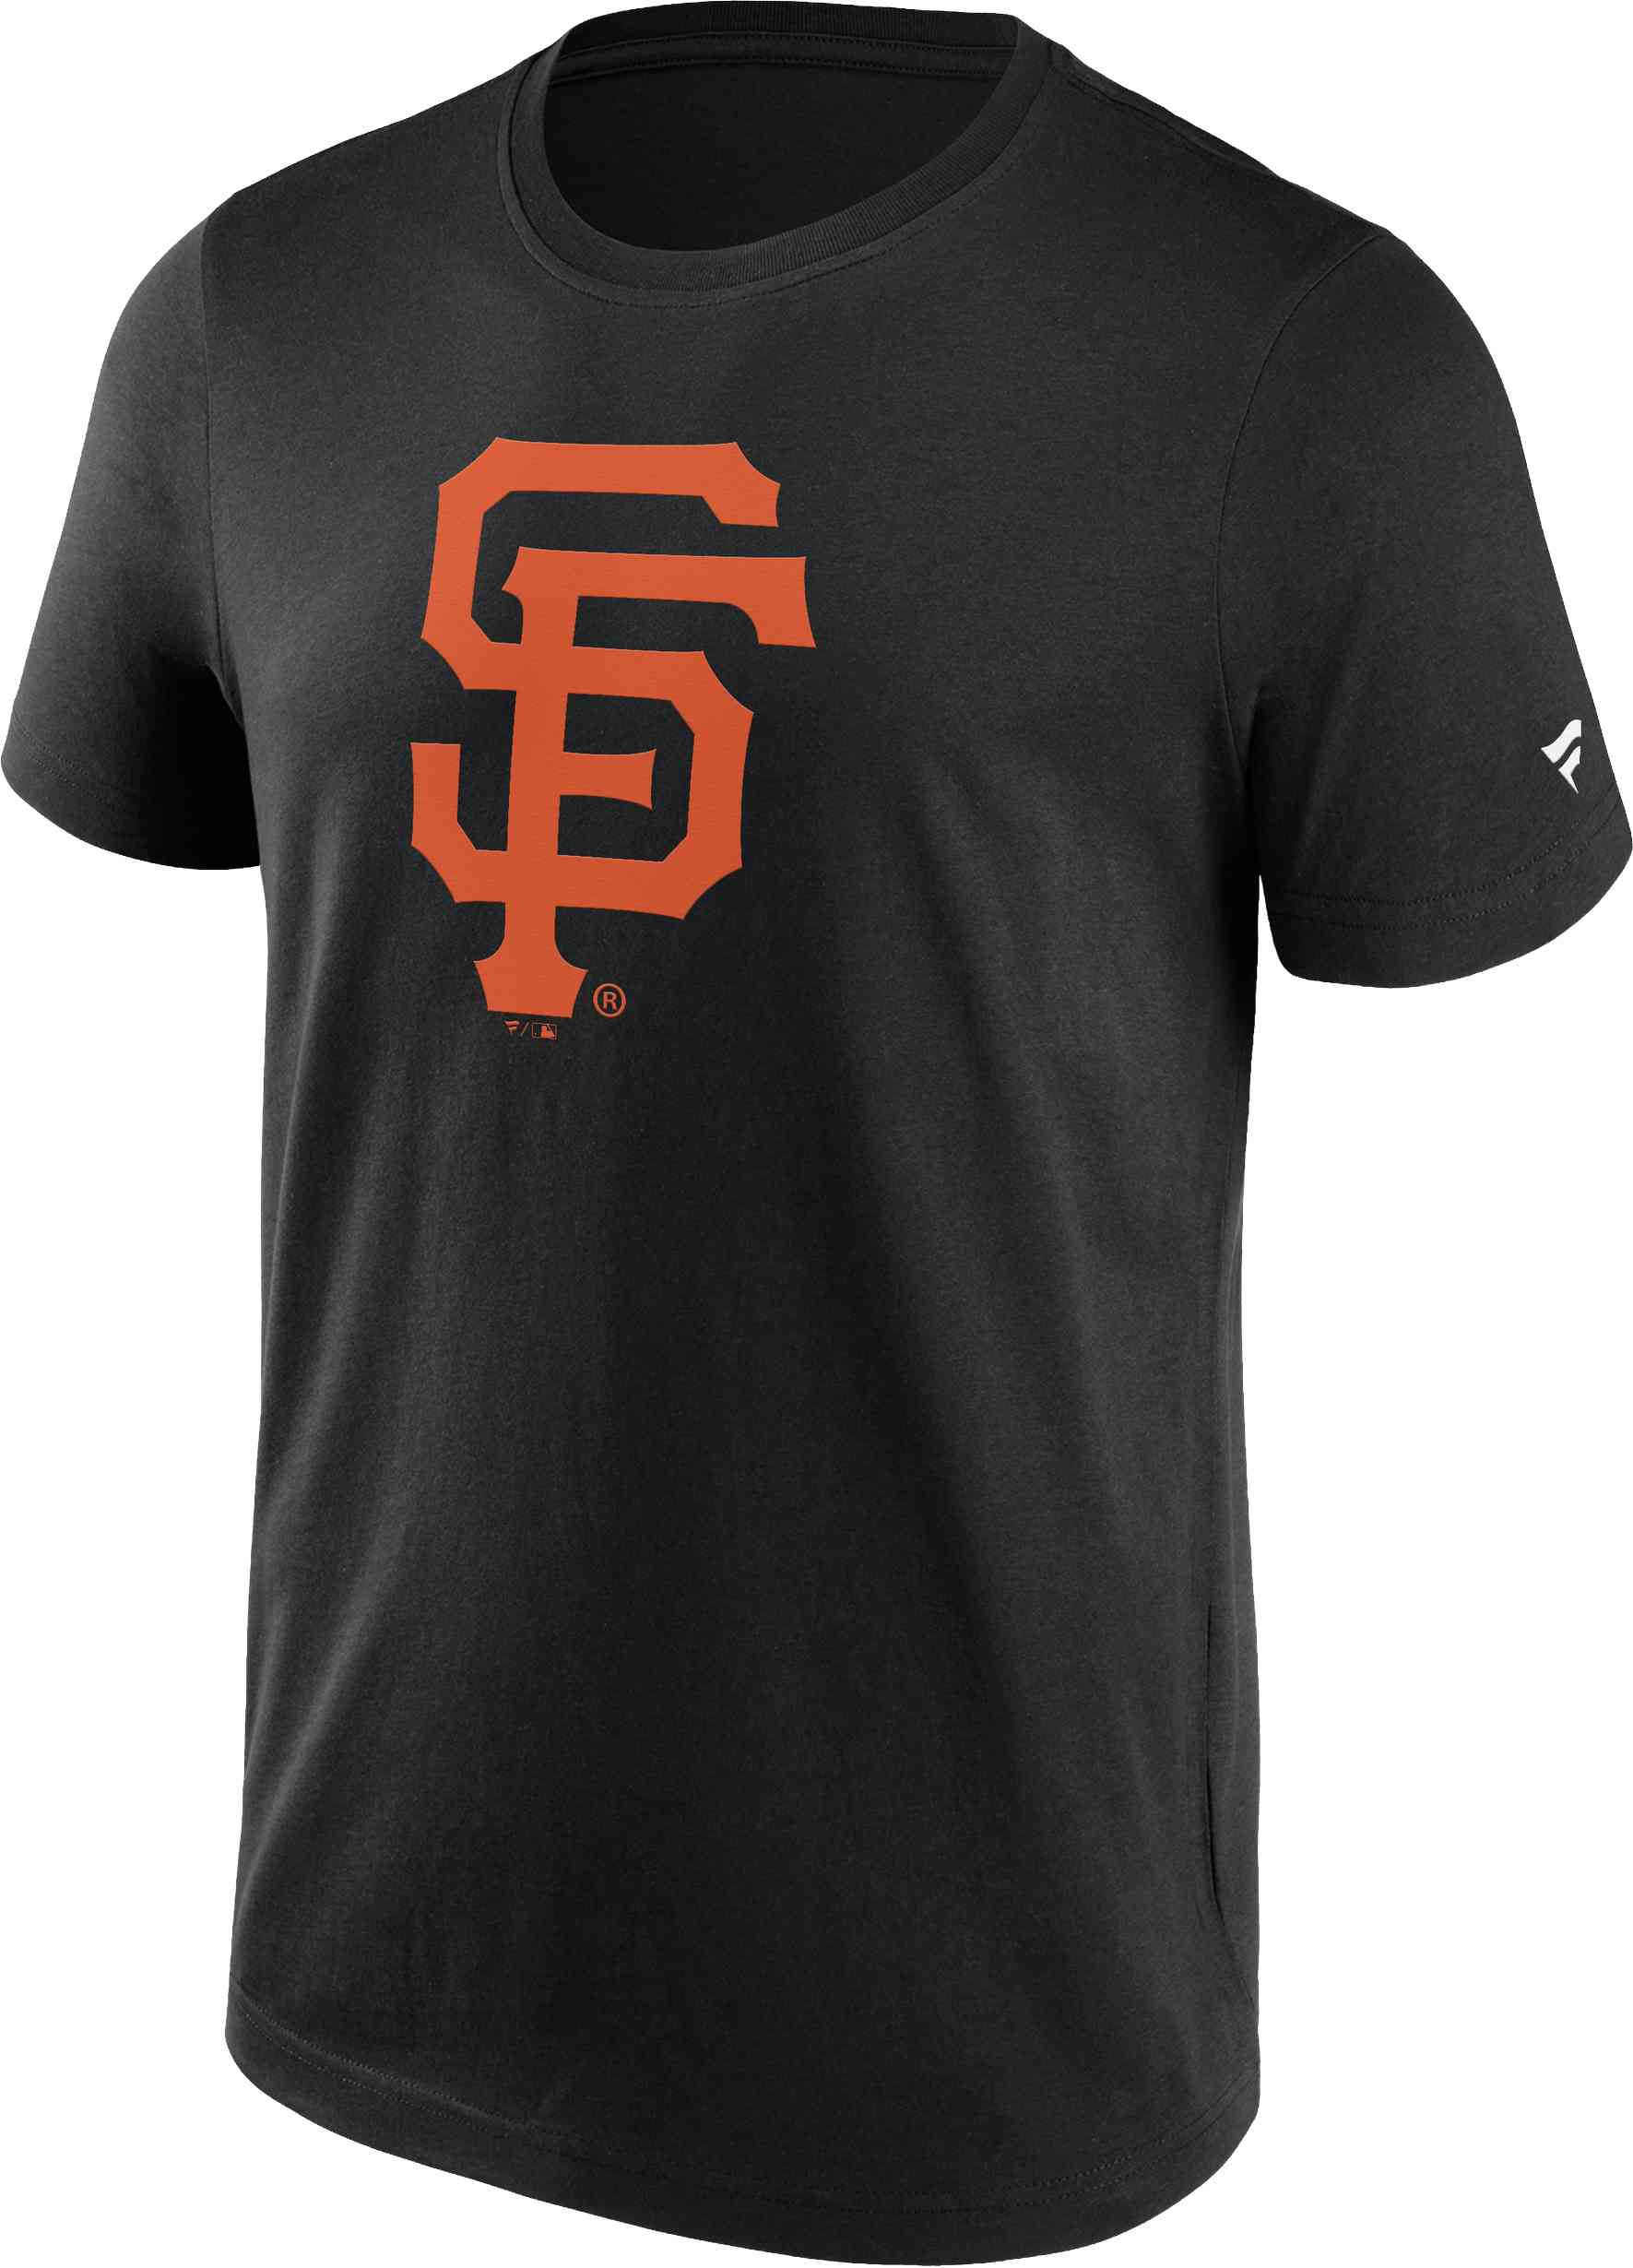 Fanatics - MLB San Francisco Giants Primary Logo Graphic T-Shirt